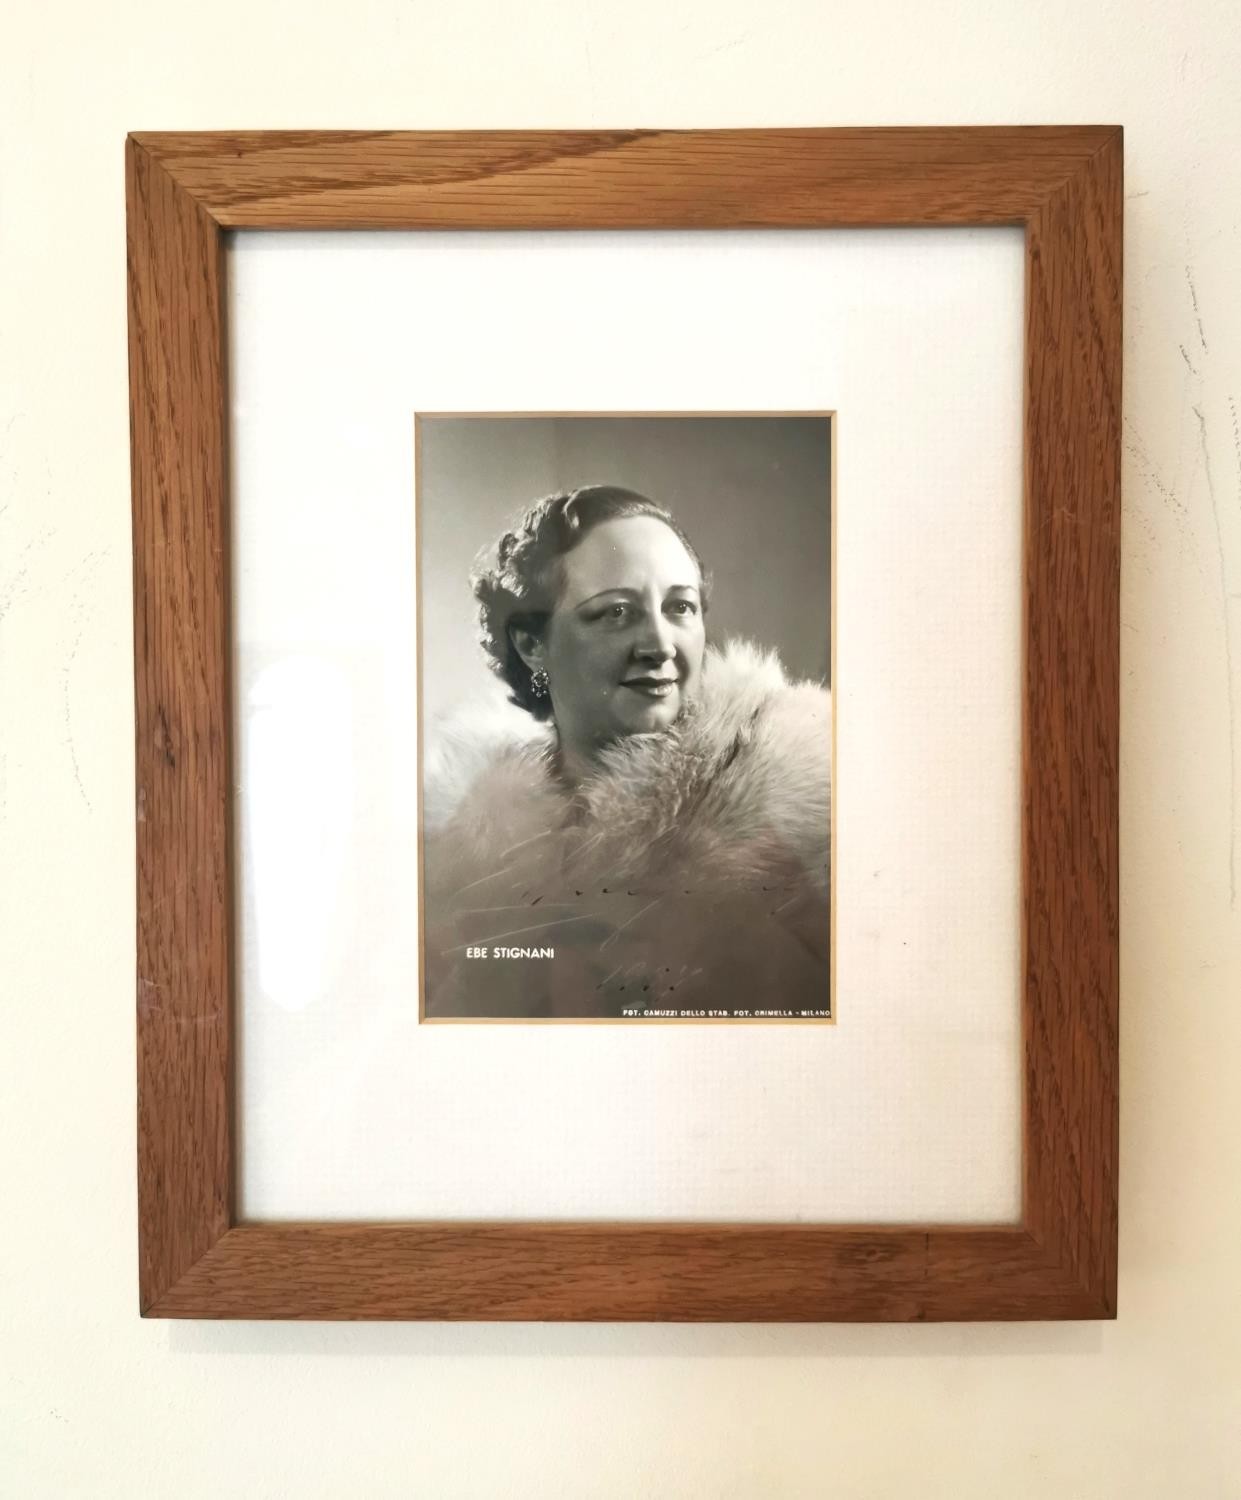 Four framed and glazed signed vintage photographs of famous actors, John Calvert, Ebe Stignani, Gino - Image 4 of 13